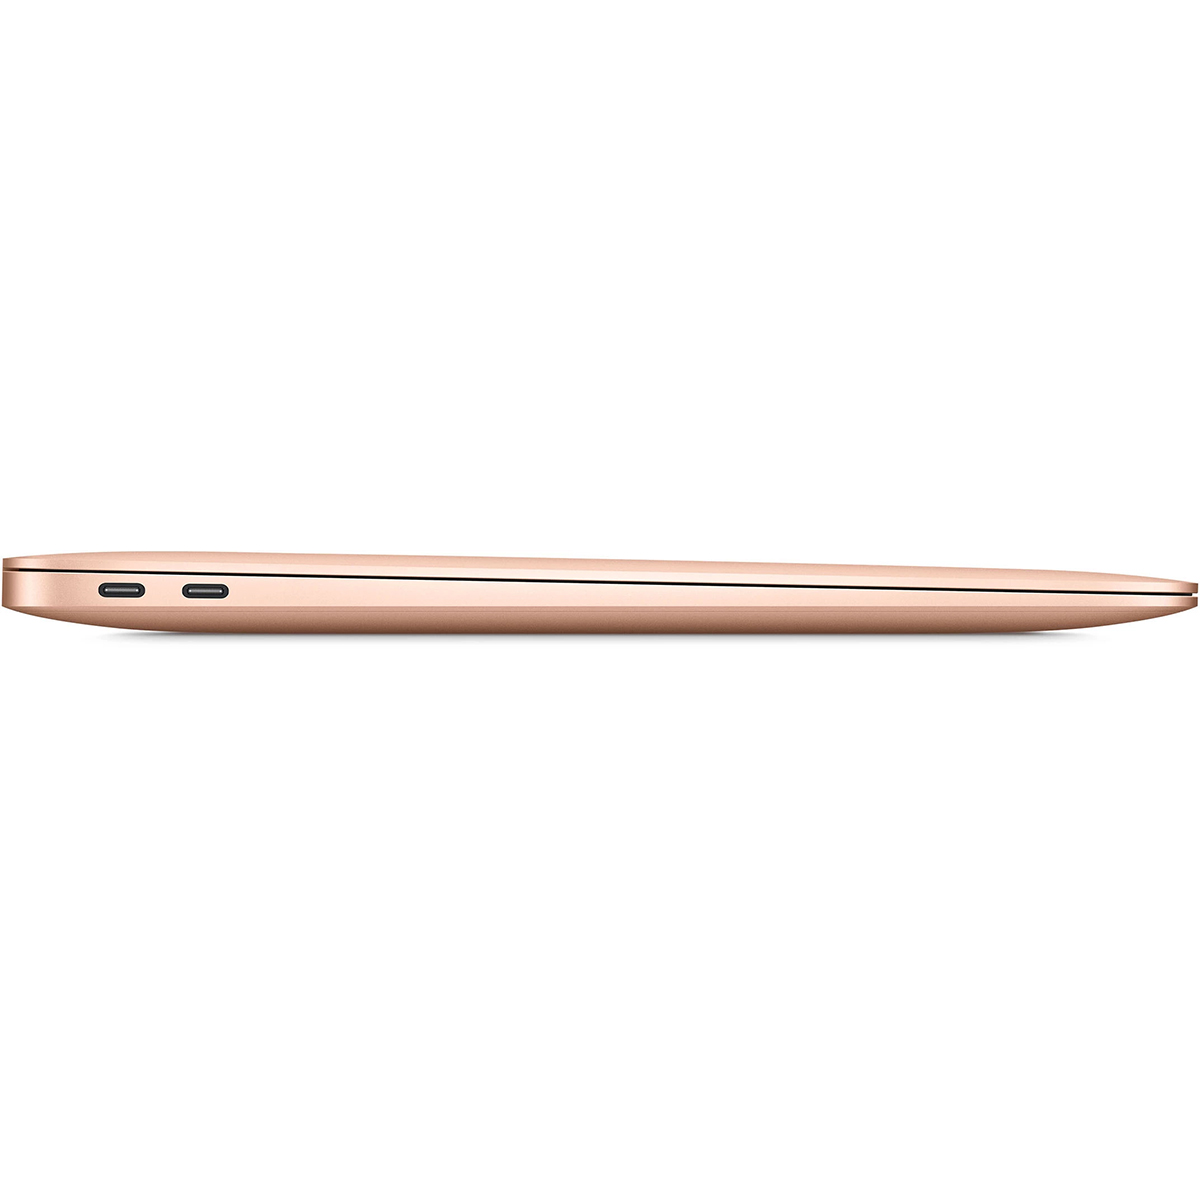 Apple MacBook Air (2020) 13.3" M1 256 Gb Gold MGND3